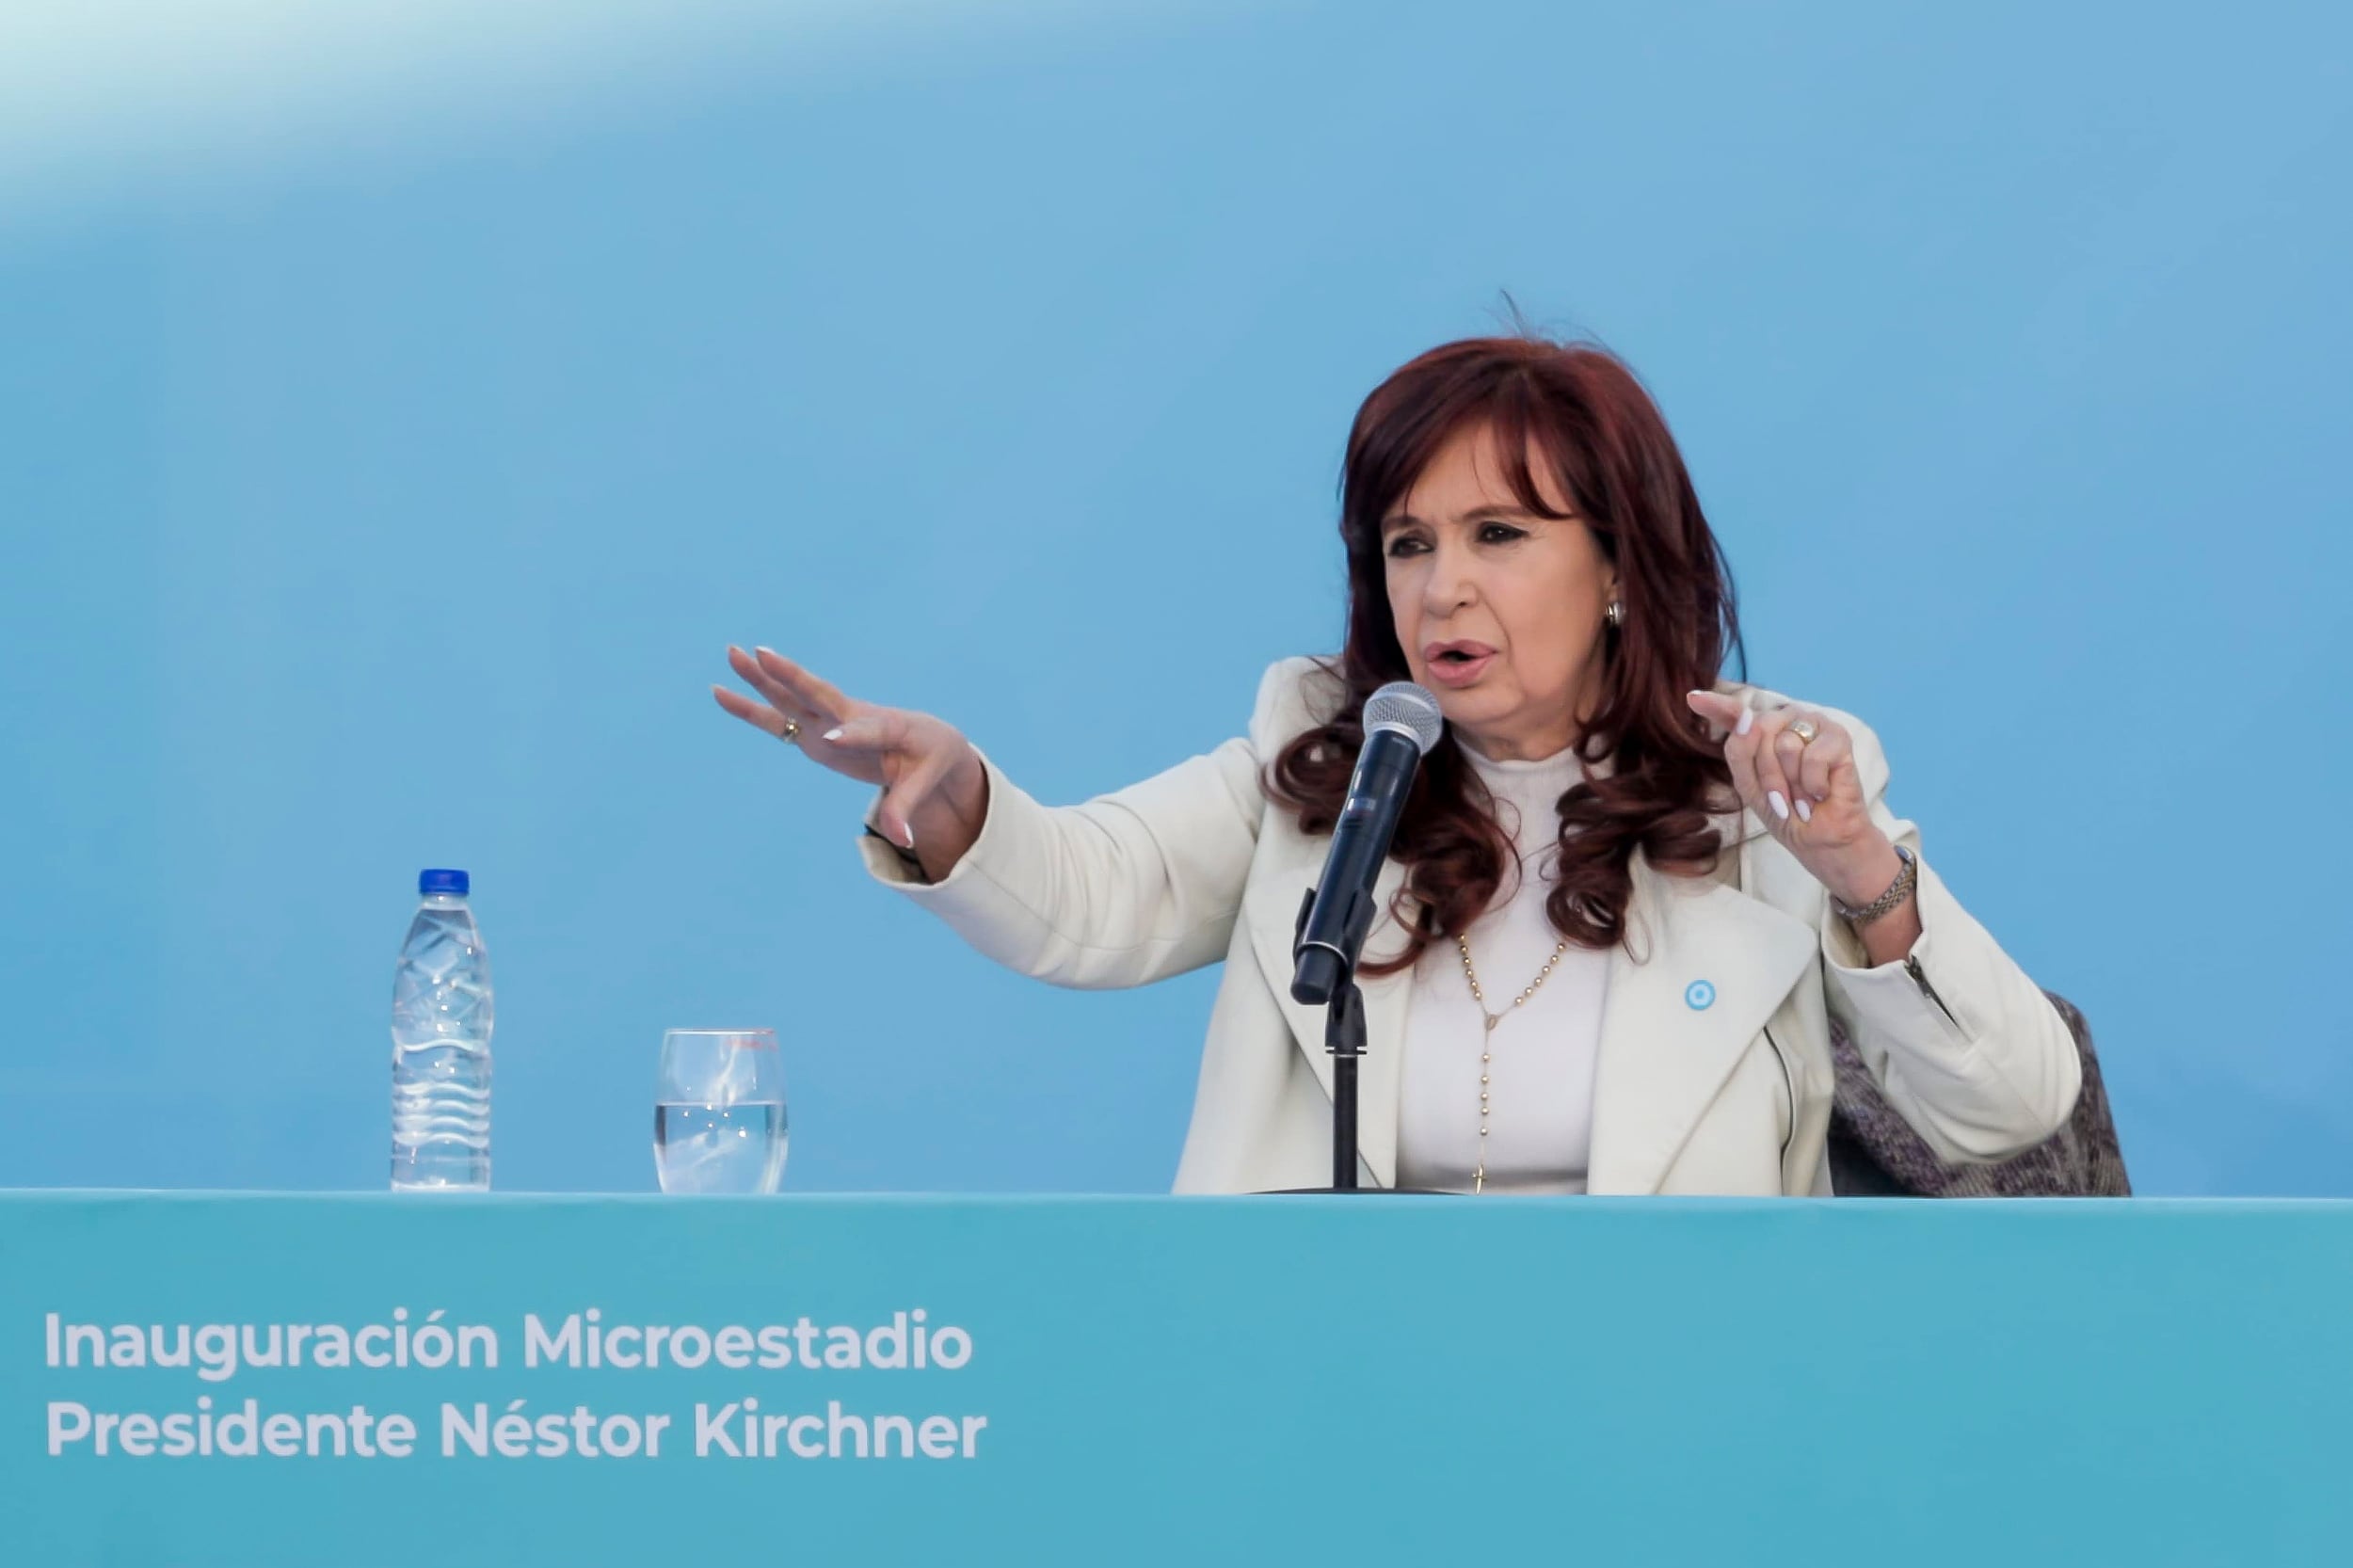 Cristina Fernández de Kirchner en Quilmes.